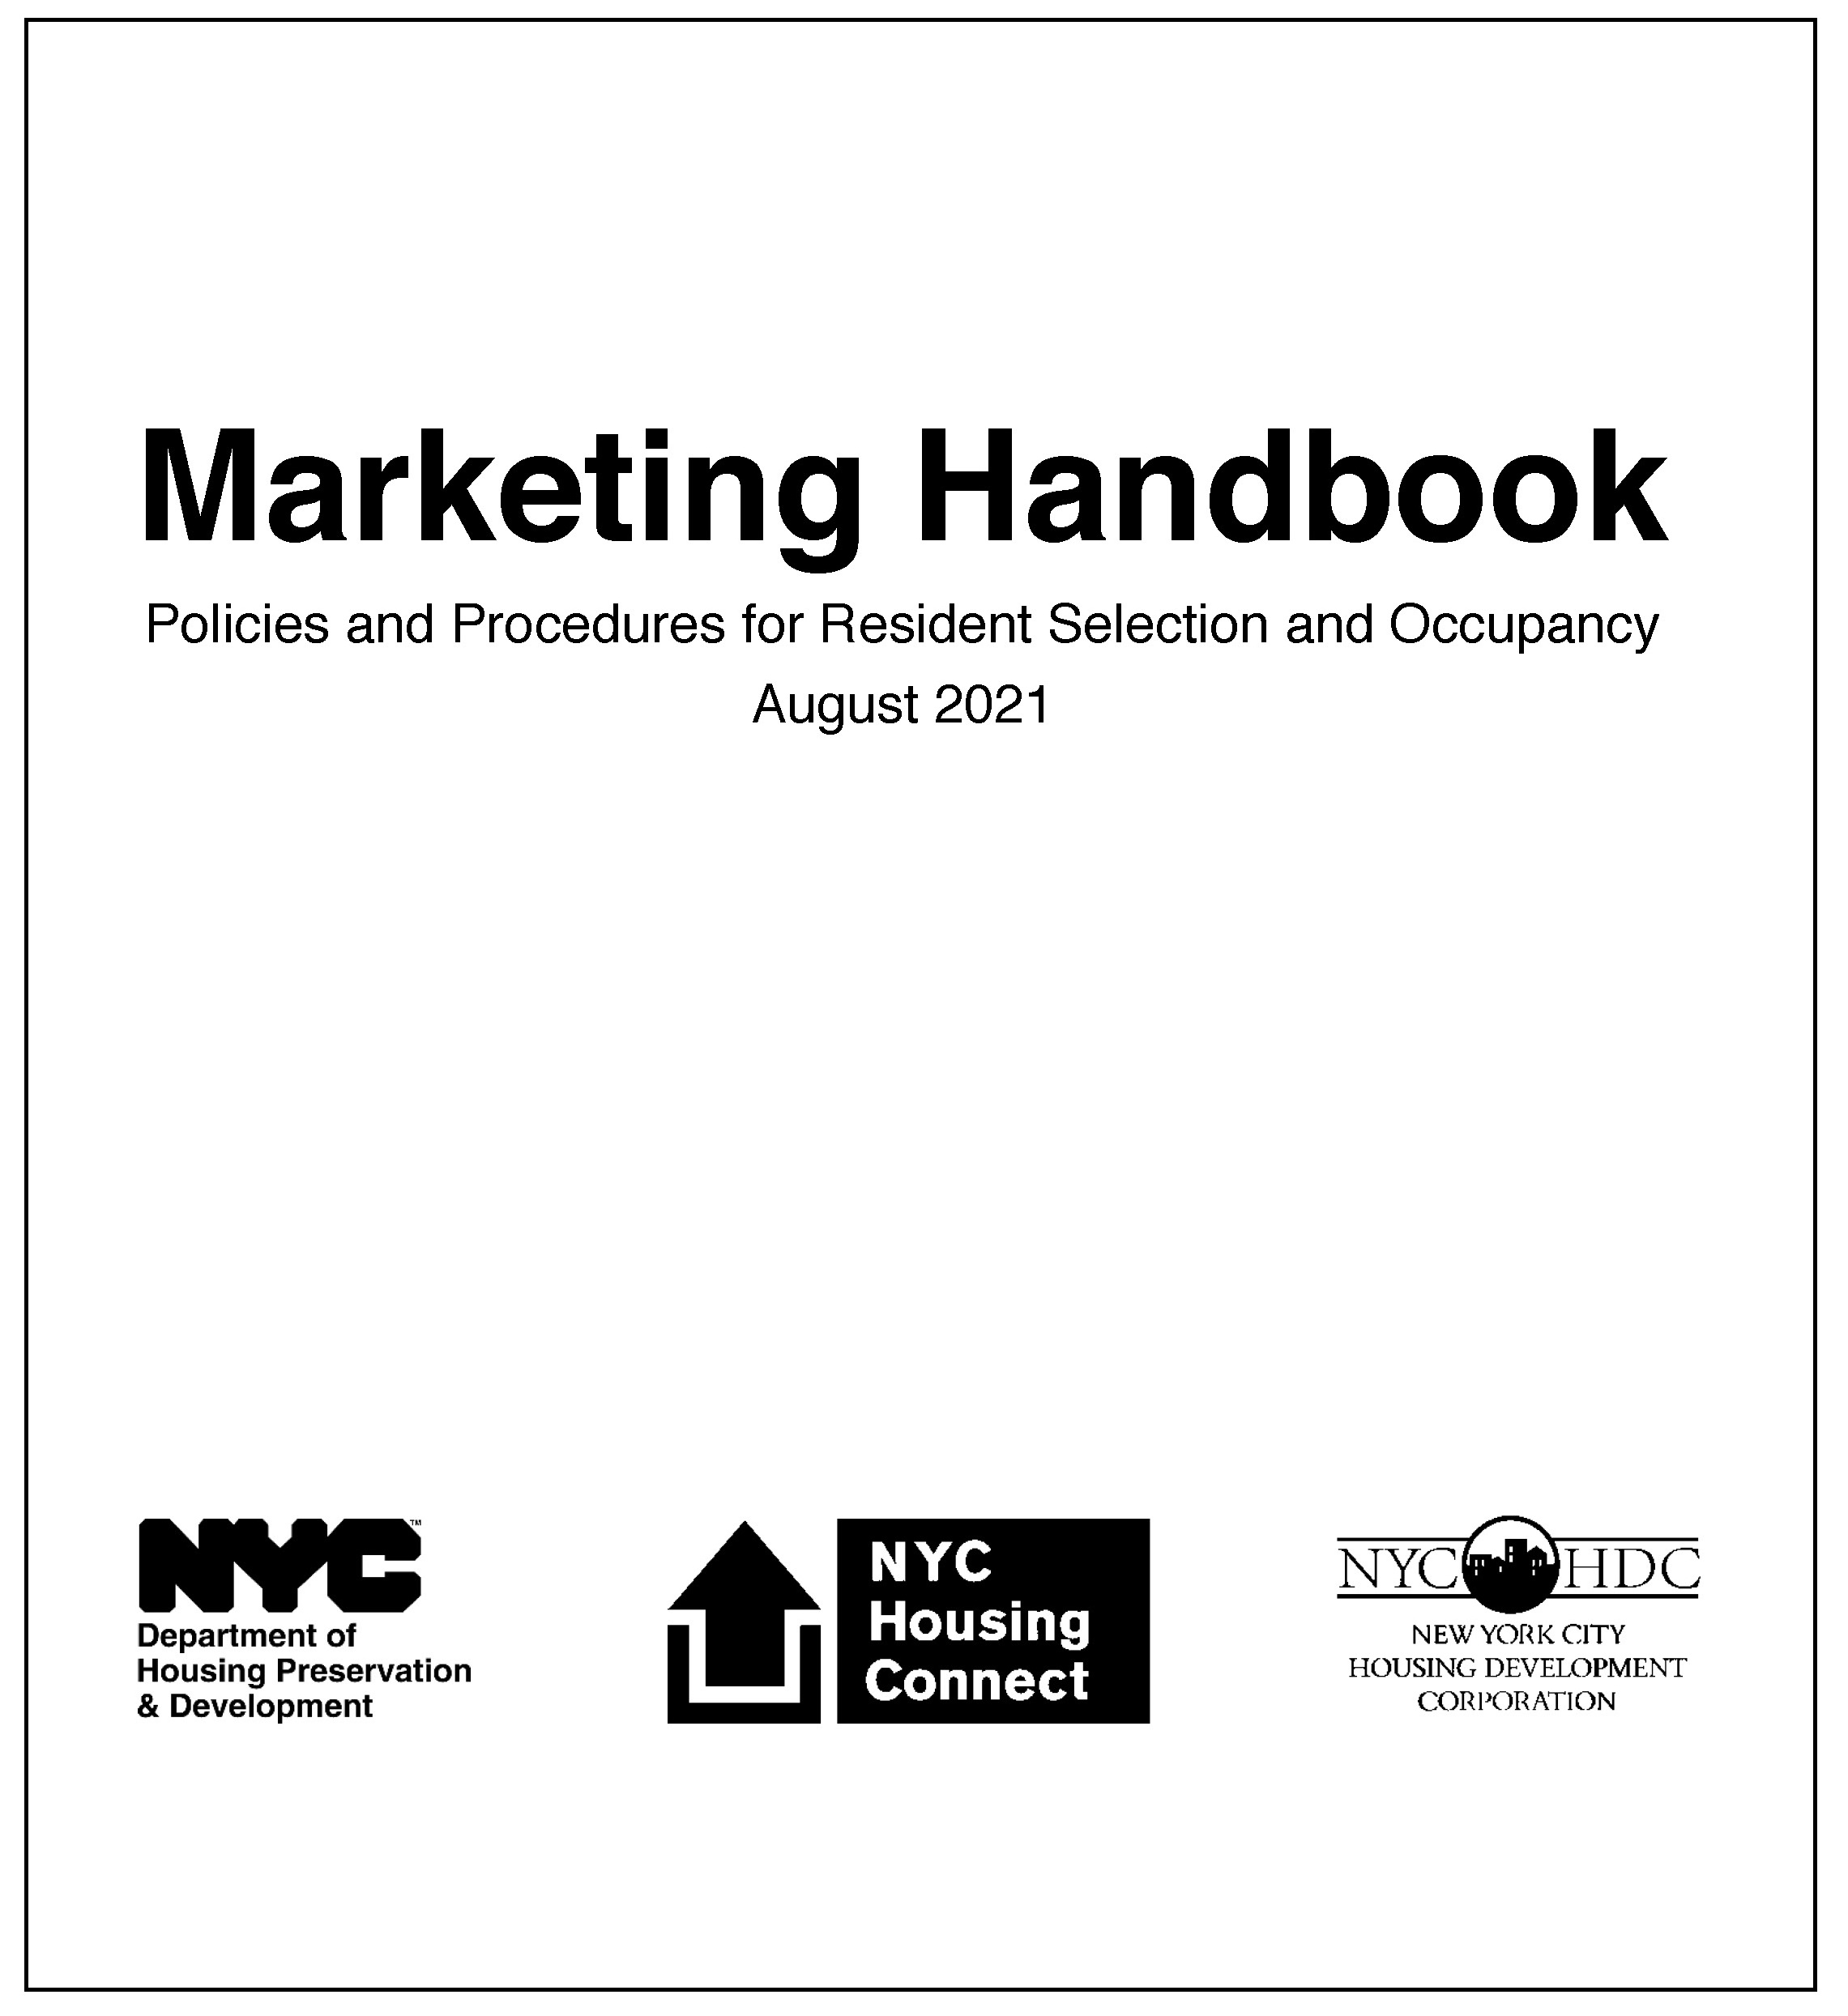 Marketing Handbook cover page